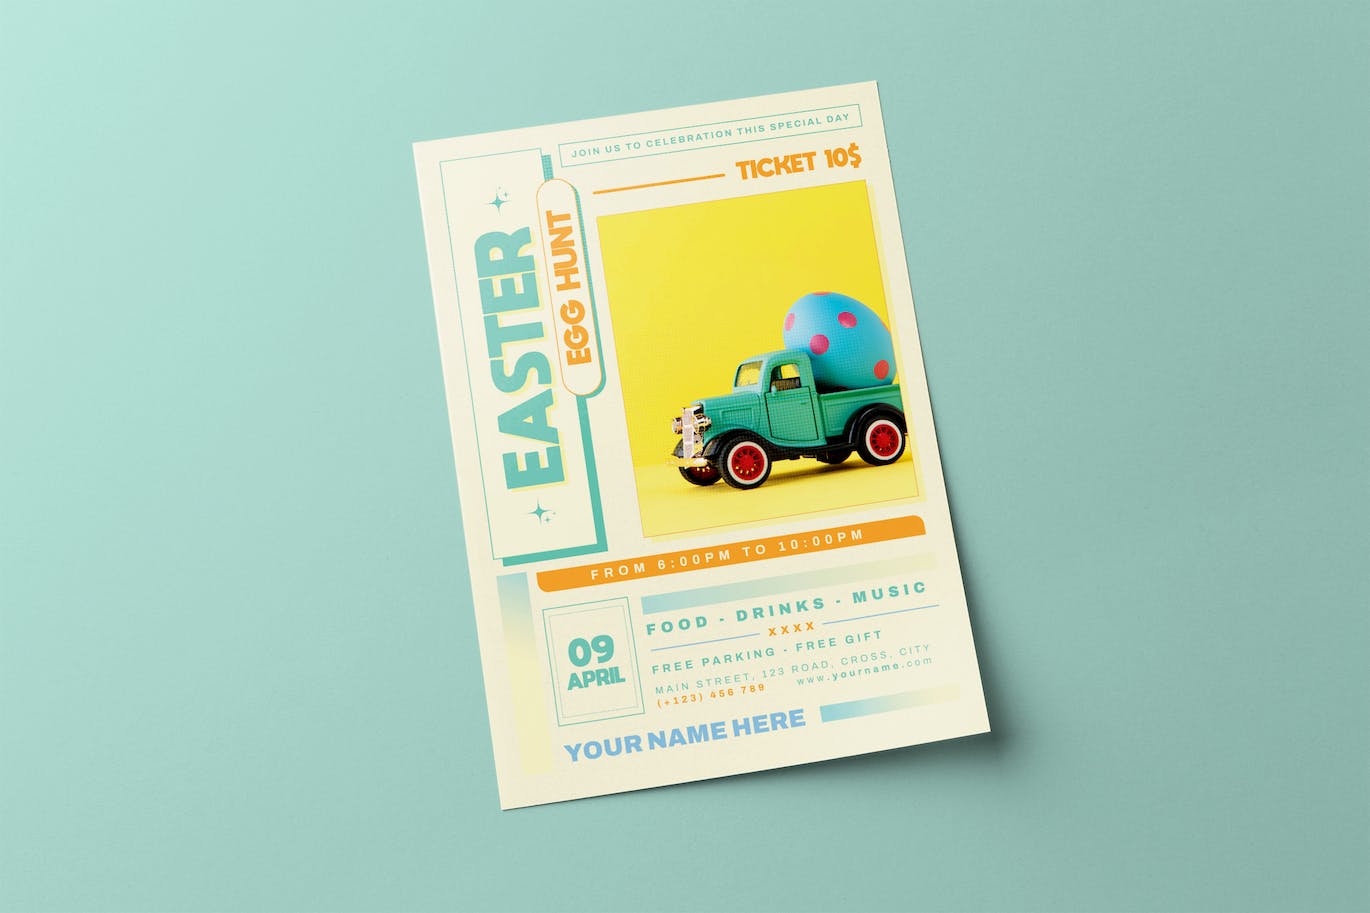 复活节寻蛋活动海报模板下载 Easter Egg Hunt Flyer 设计素材 第1张